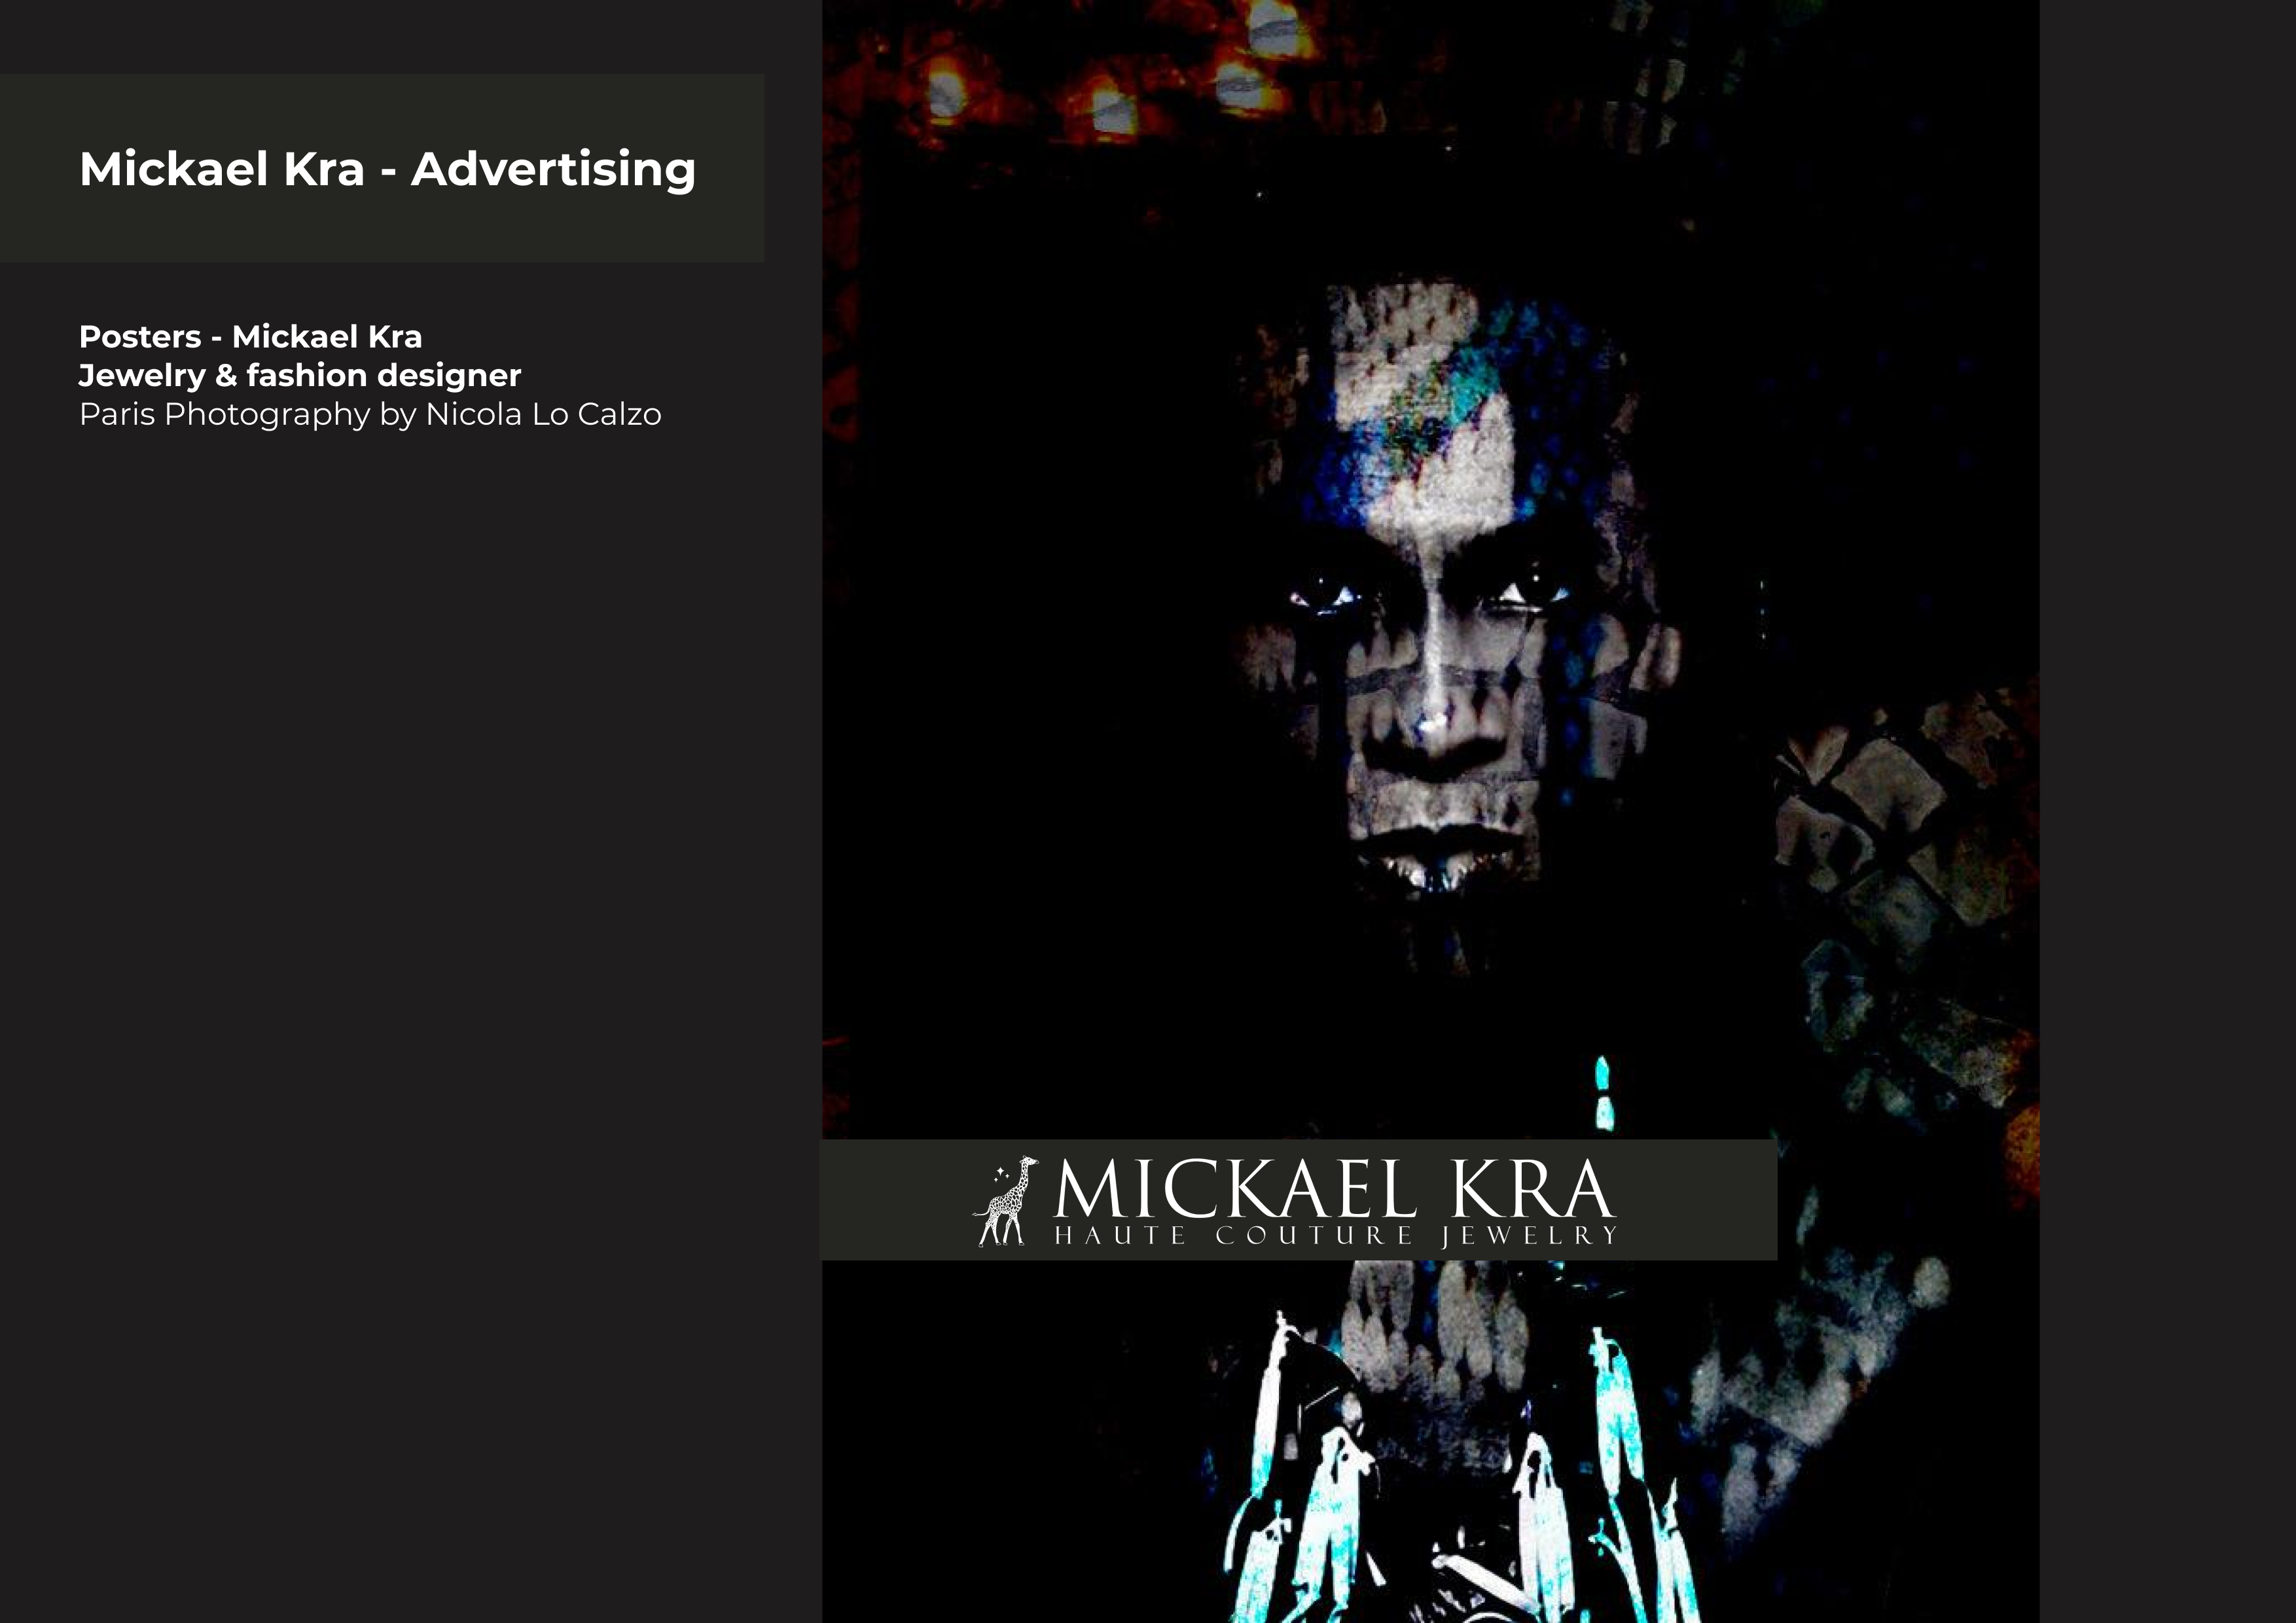 MK - Advertising campaign - Portait 3